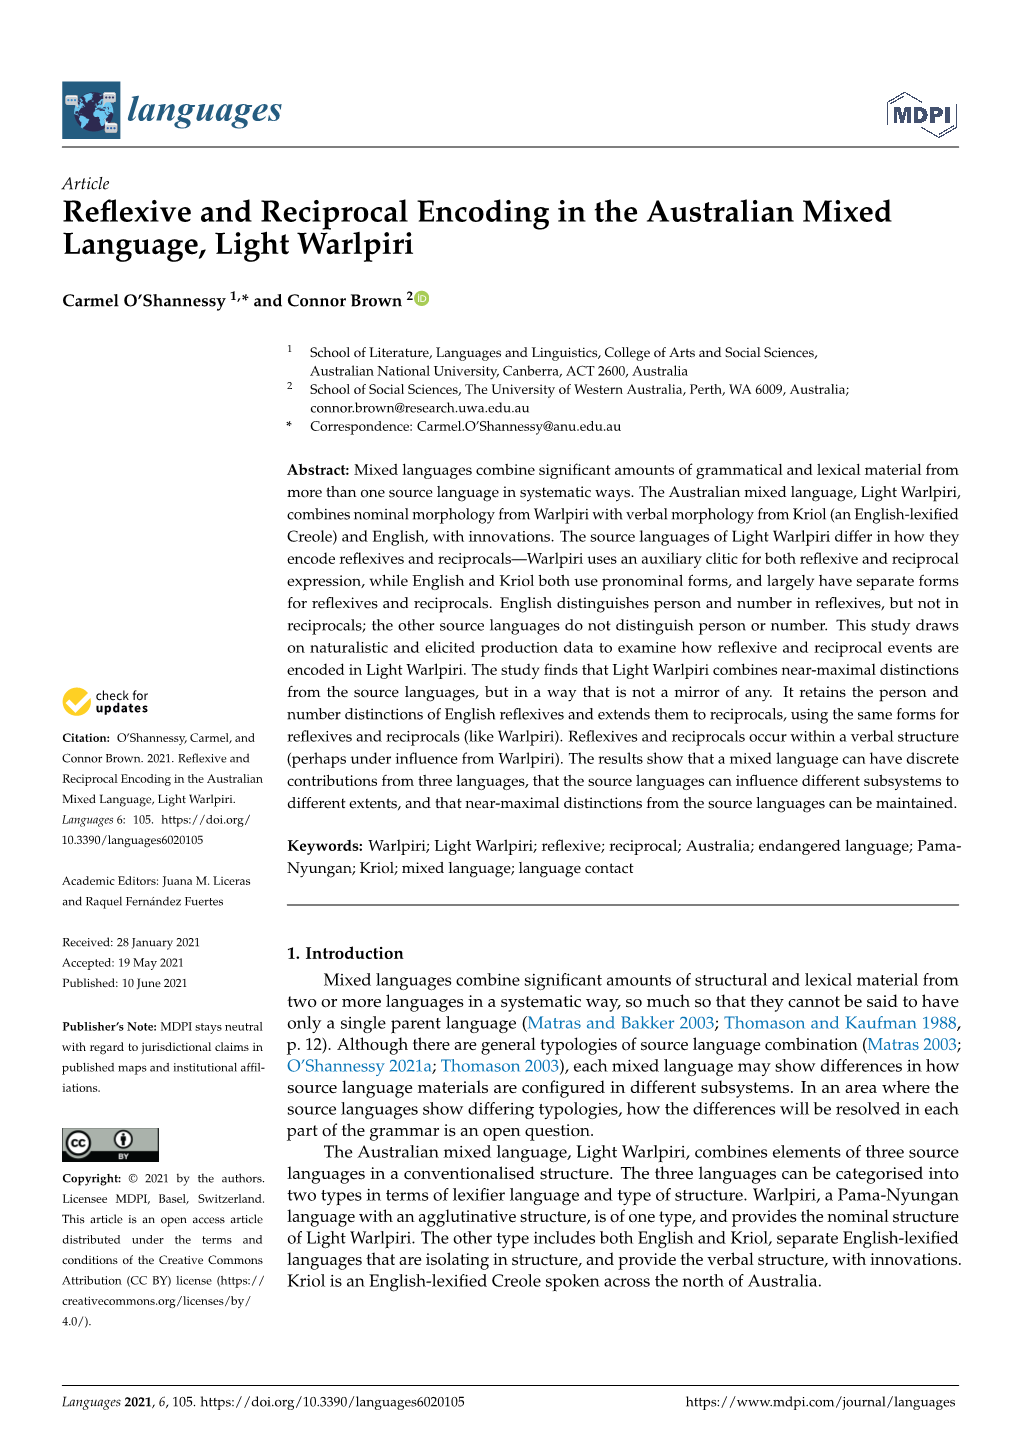 Reflexive and Reciprocal Encoding in the Australian Mixed Language, Light Warlpiri